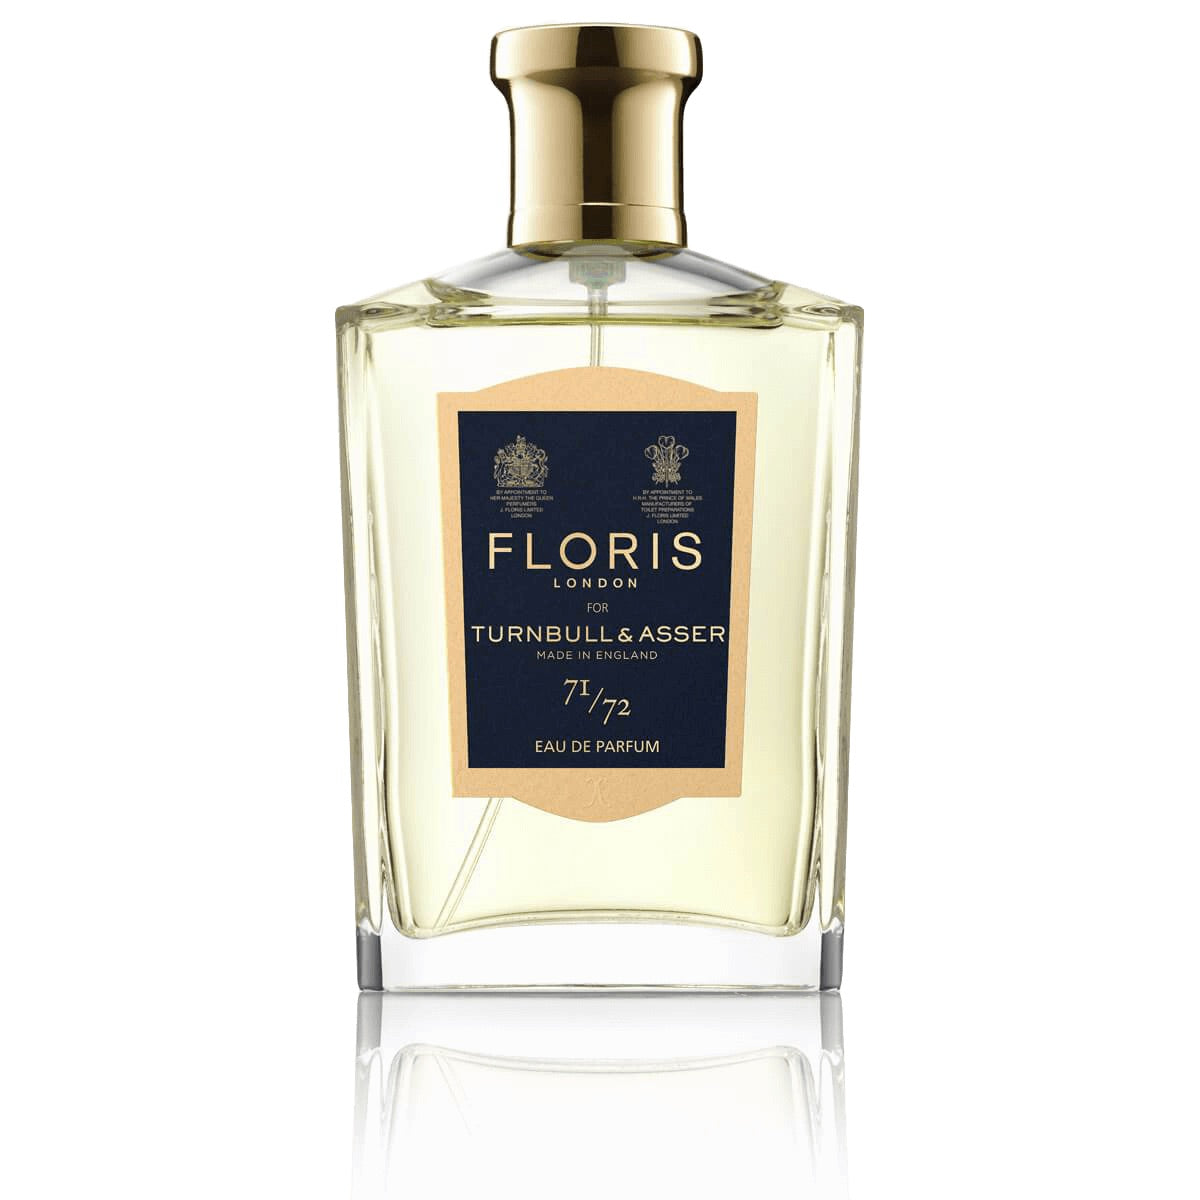 A bottle of FLORIS Turnbull & Asser 71/72 EDP 100 ML fragrance on a white background by KirbyAllison.com.